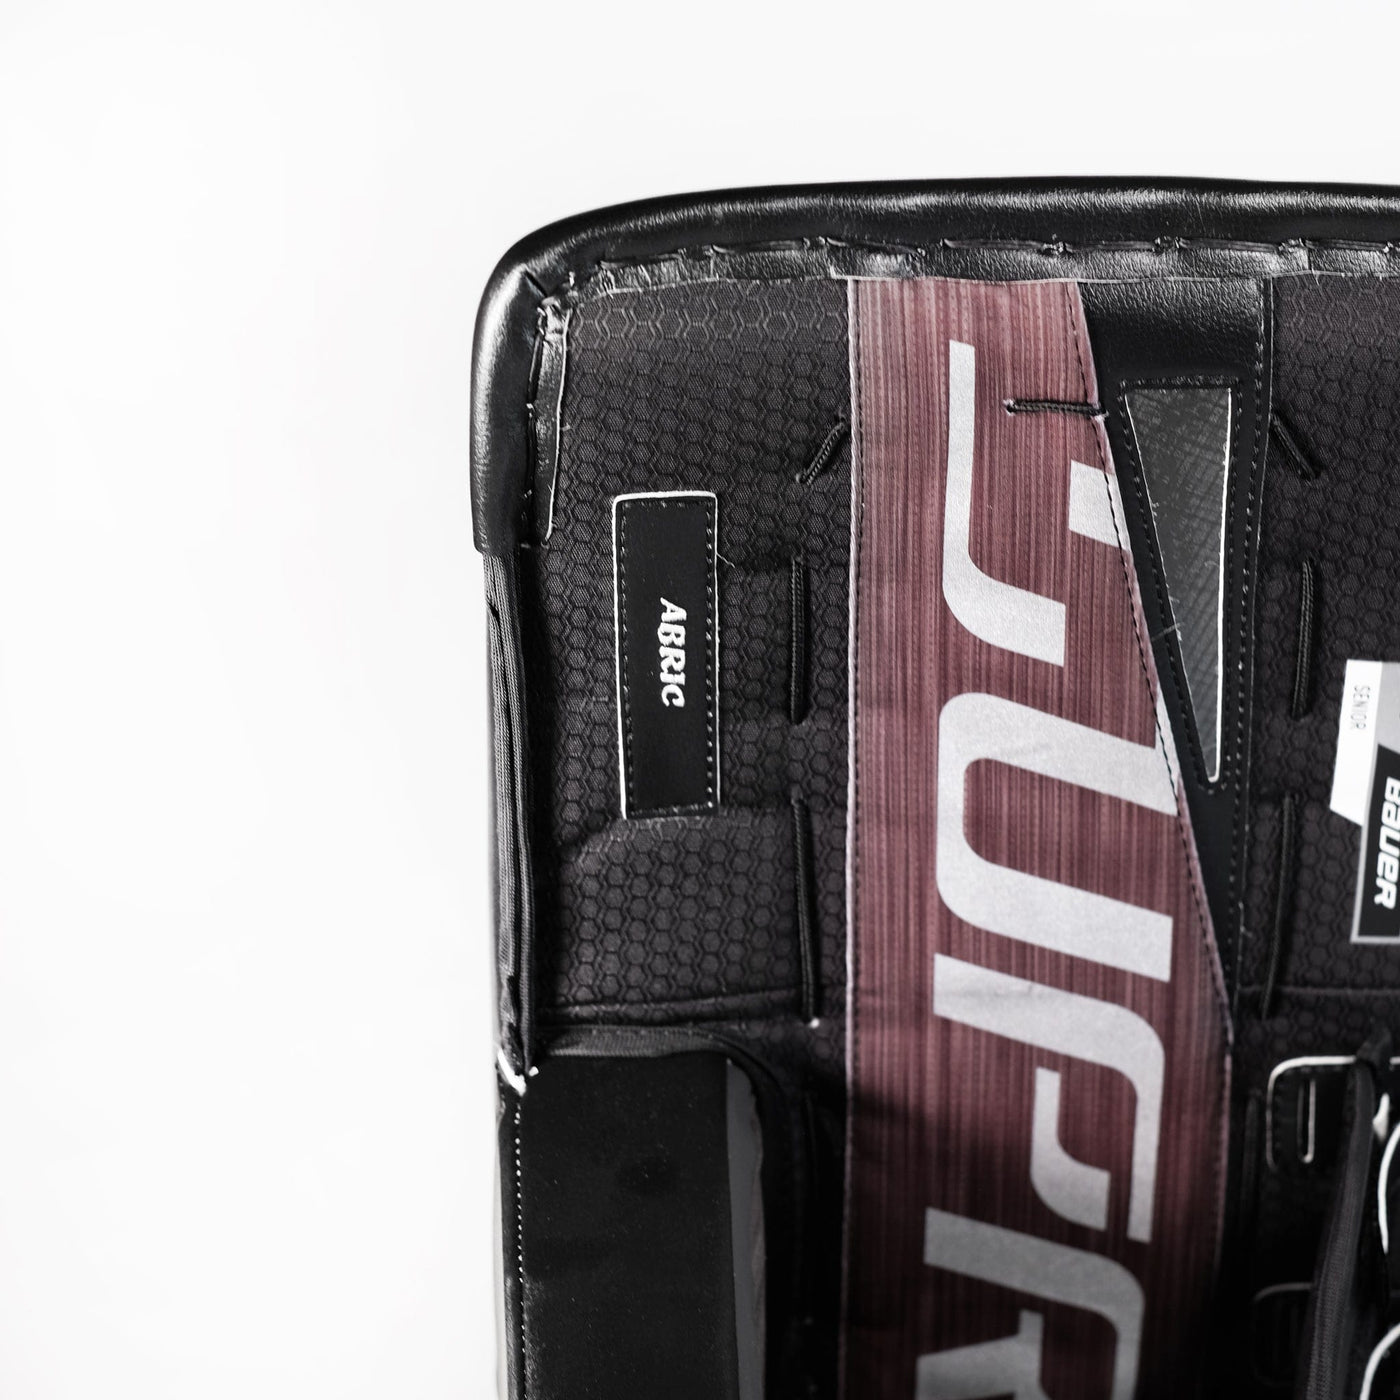 Bauer Supreme Pro Custom Senior Goalie Leg Pads - Gavin Abric - The Hockey Shop Source For Sports